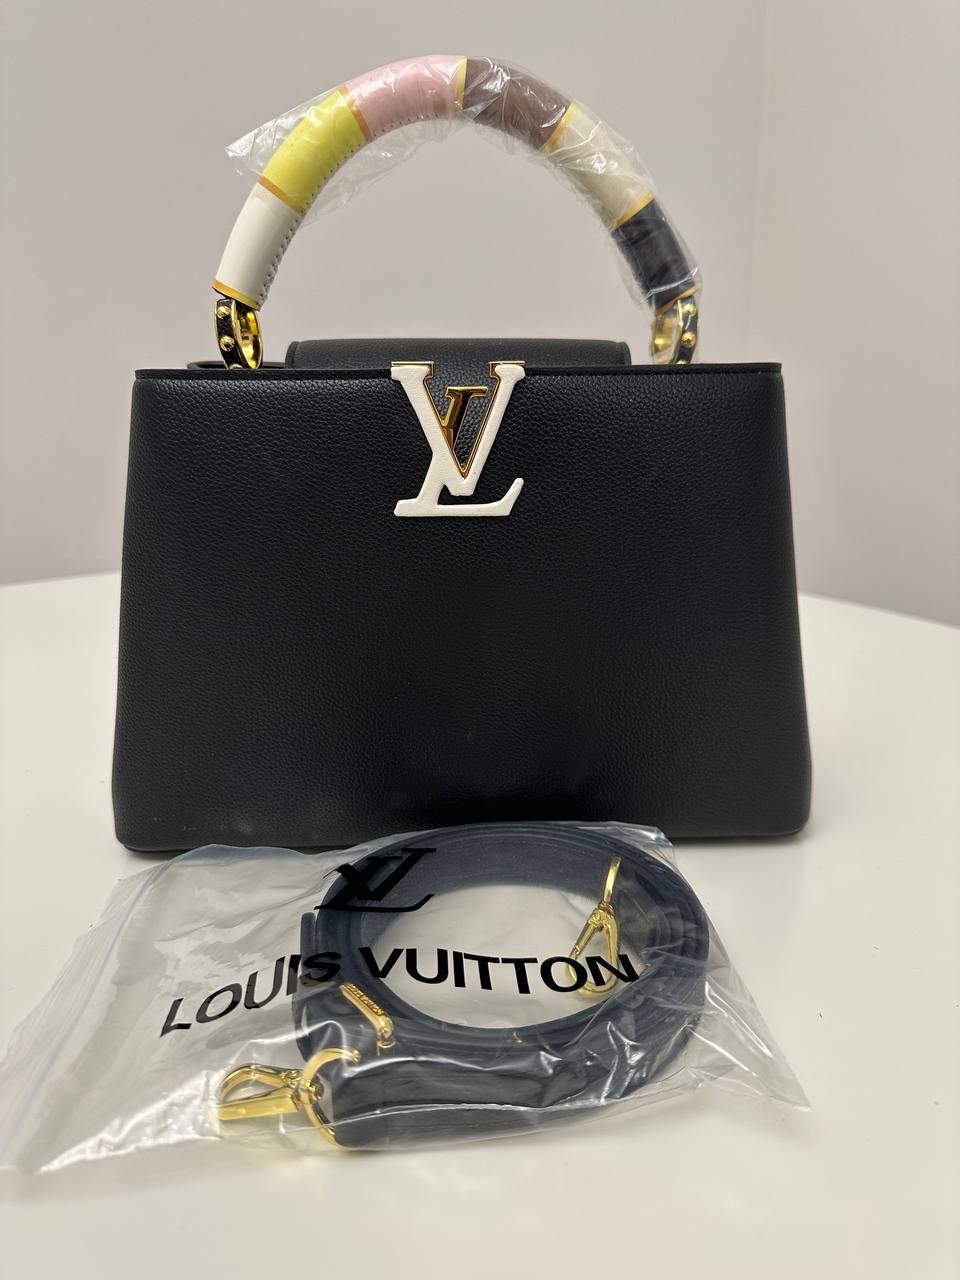 Torebki Louis Vuitton - Modne dodatki - Ekskluzywne akcesoria